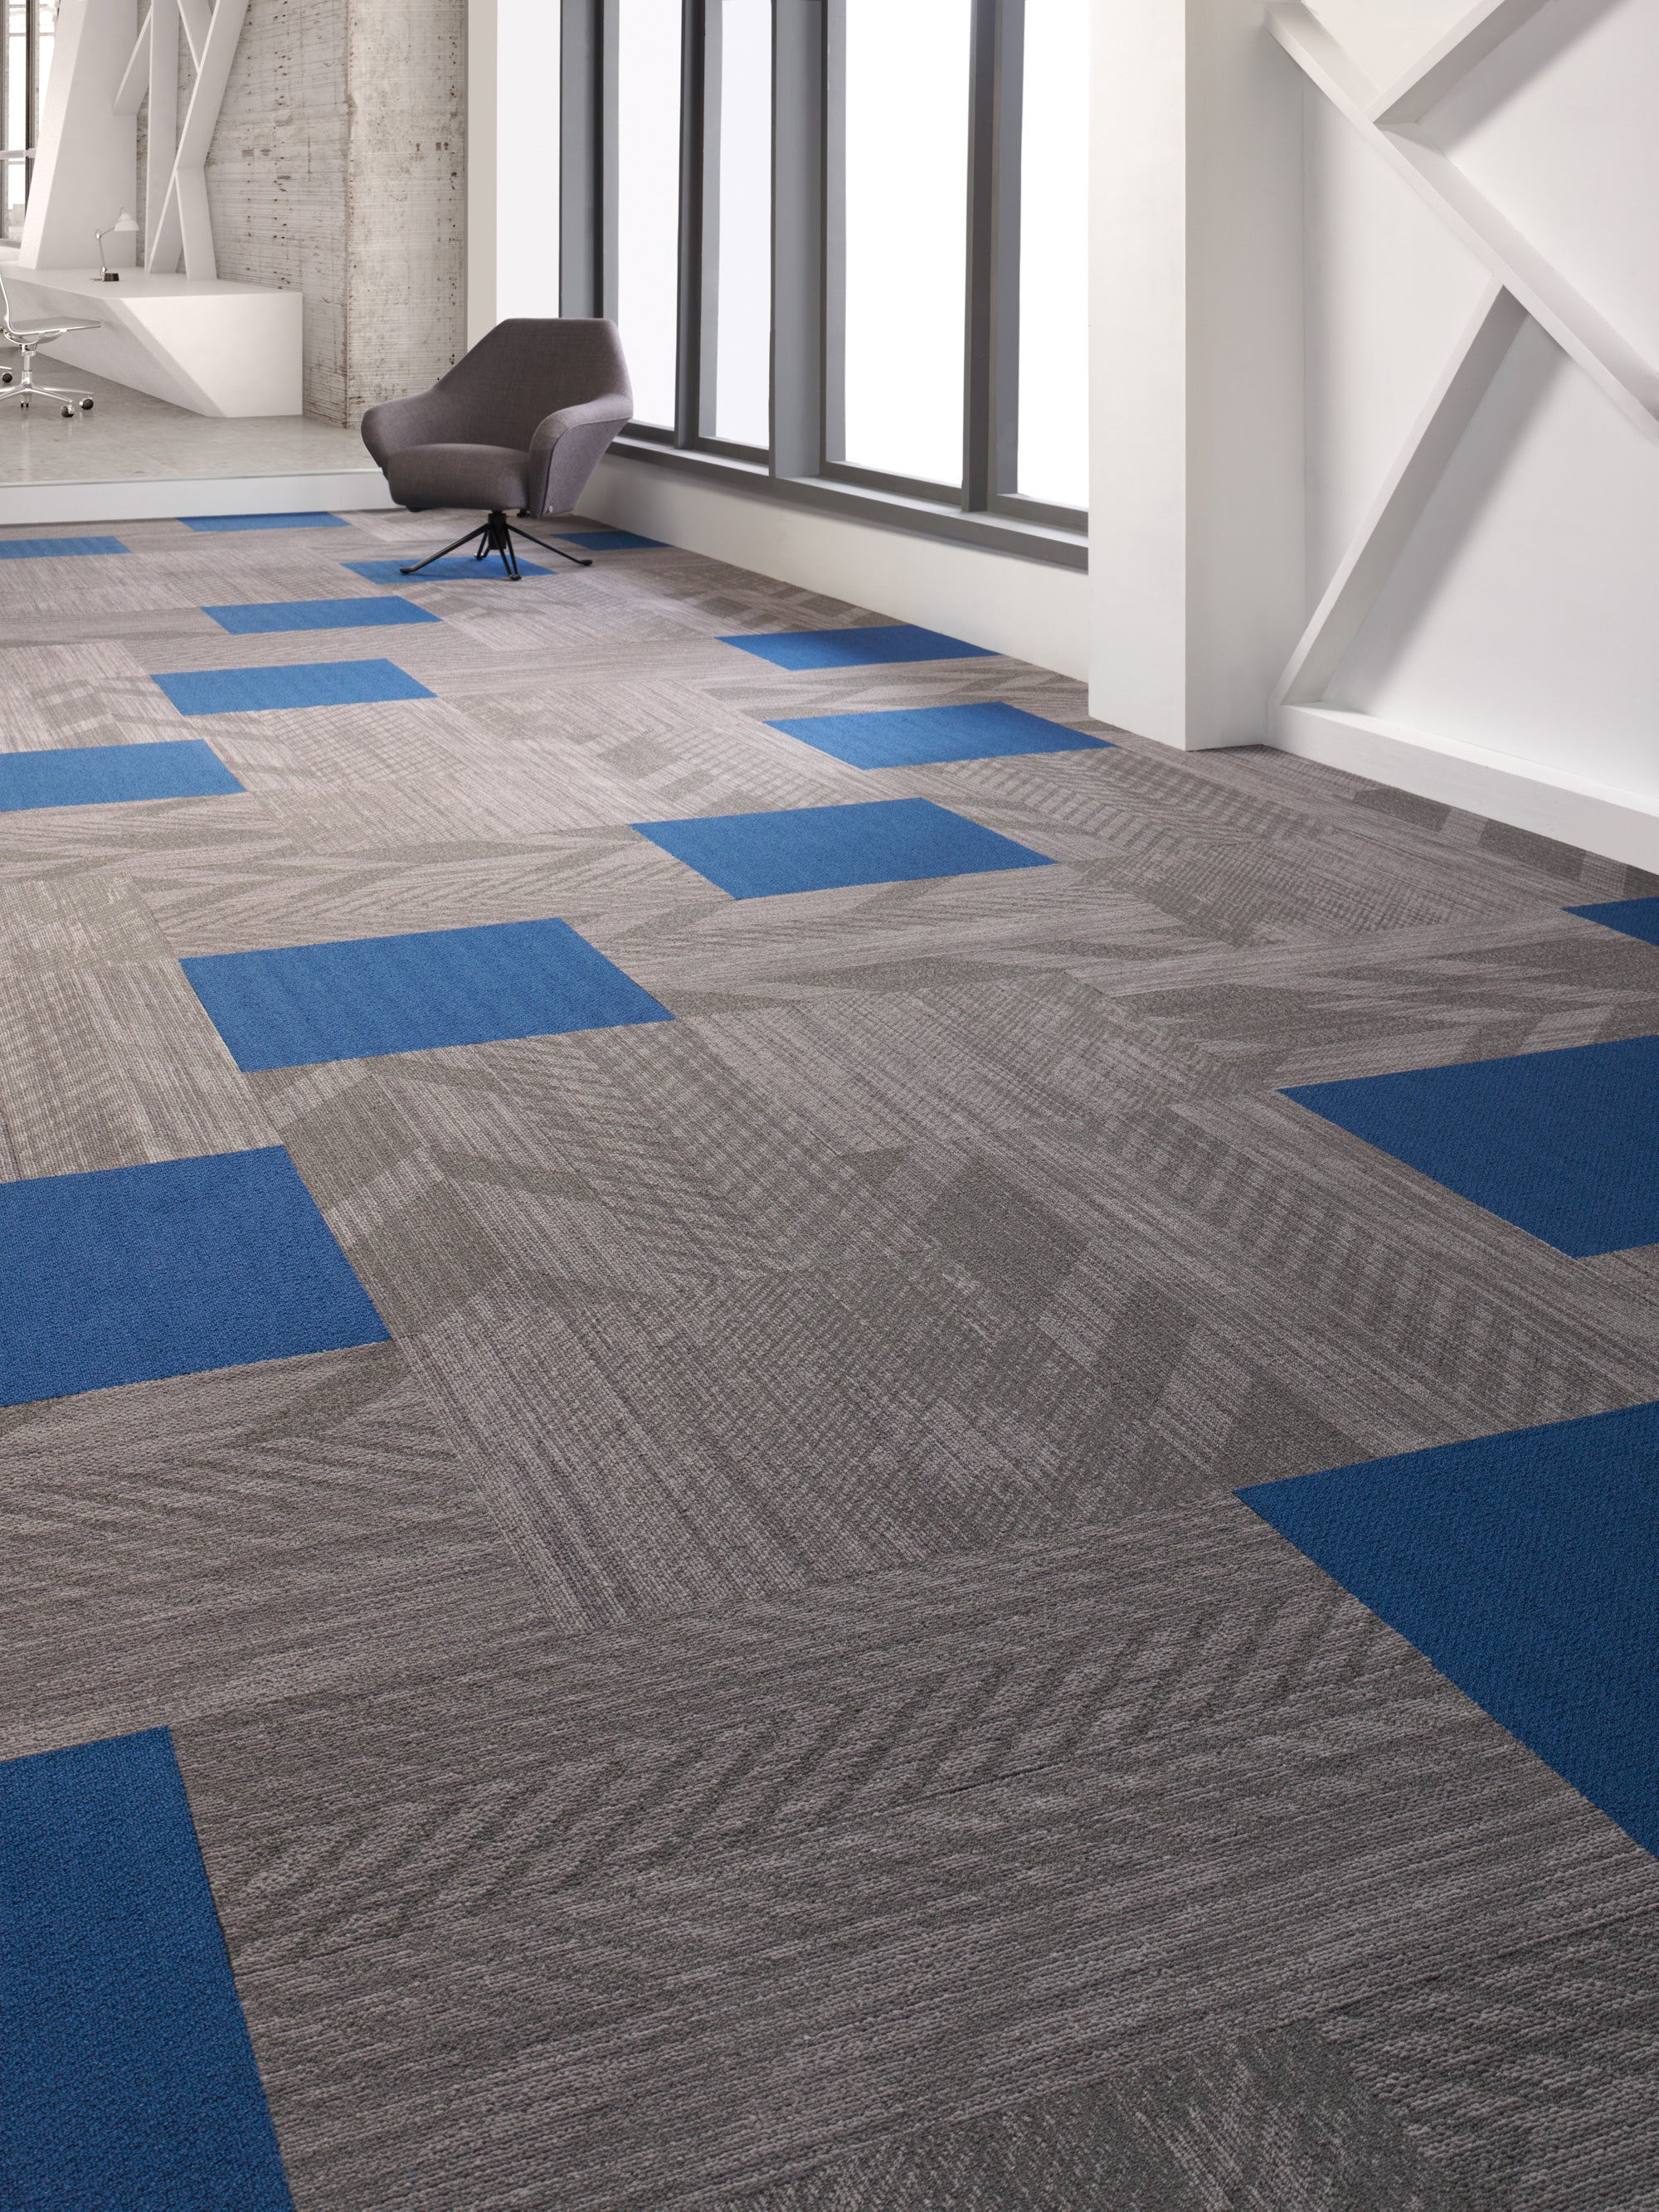 Mohawk Group Colorbeat Commercial Carpet Tile Sundried Tomato Floorzz